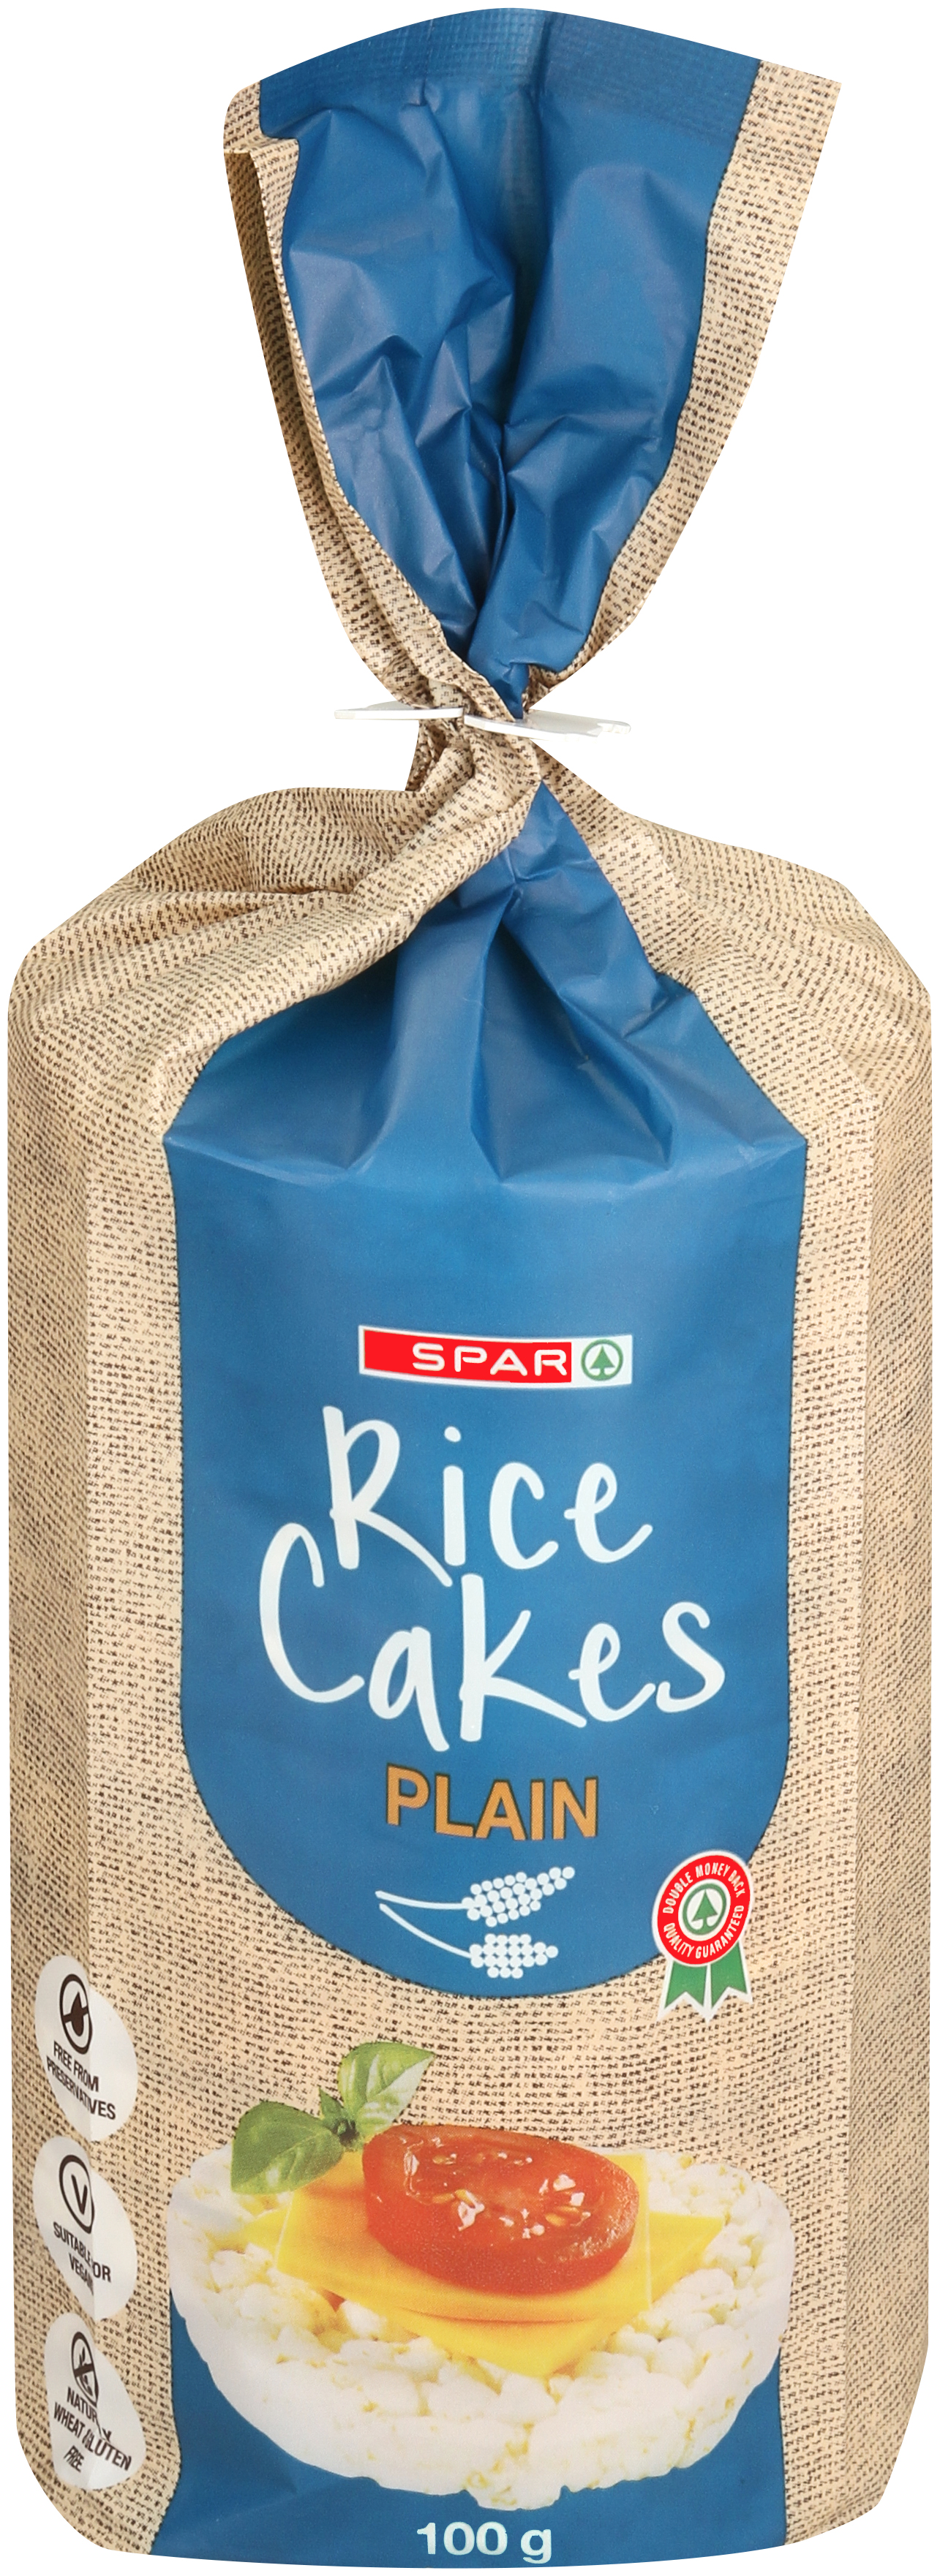 rice cakes plain